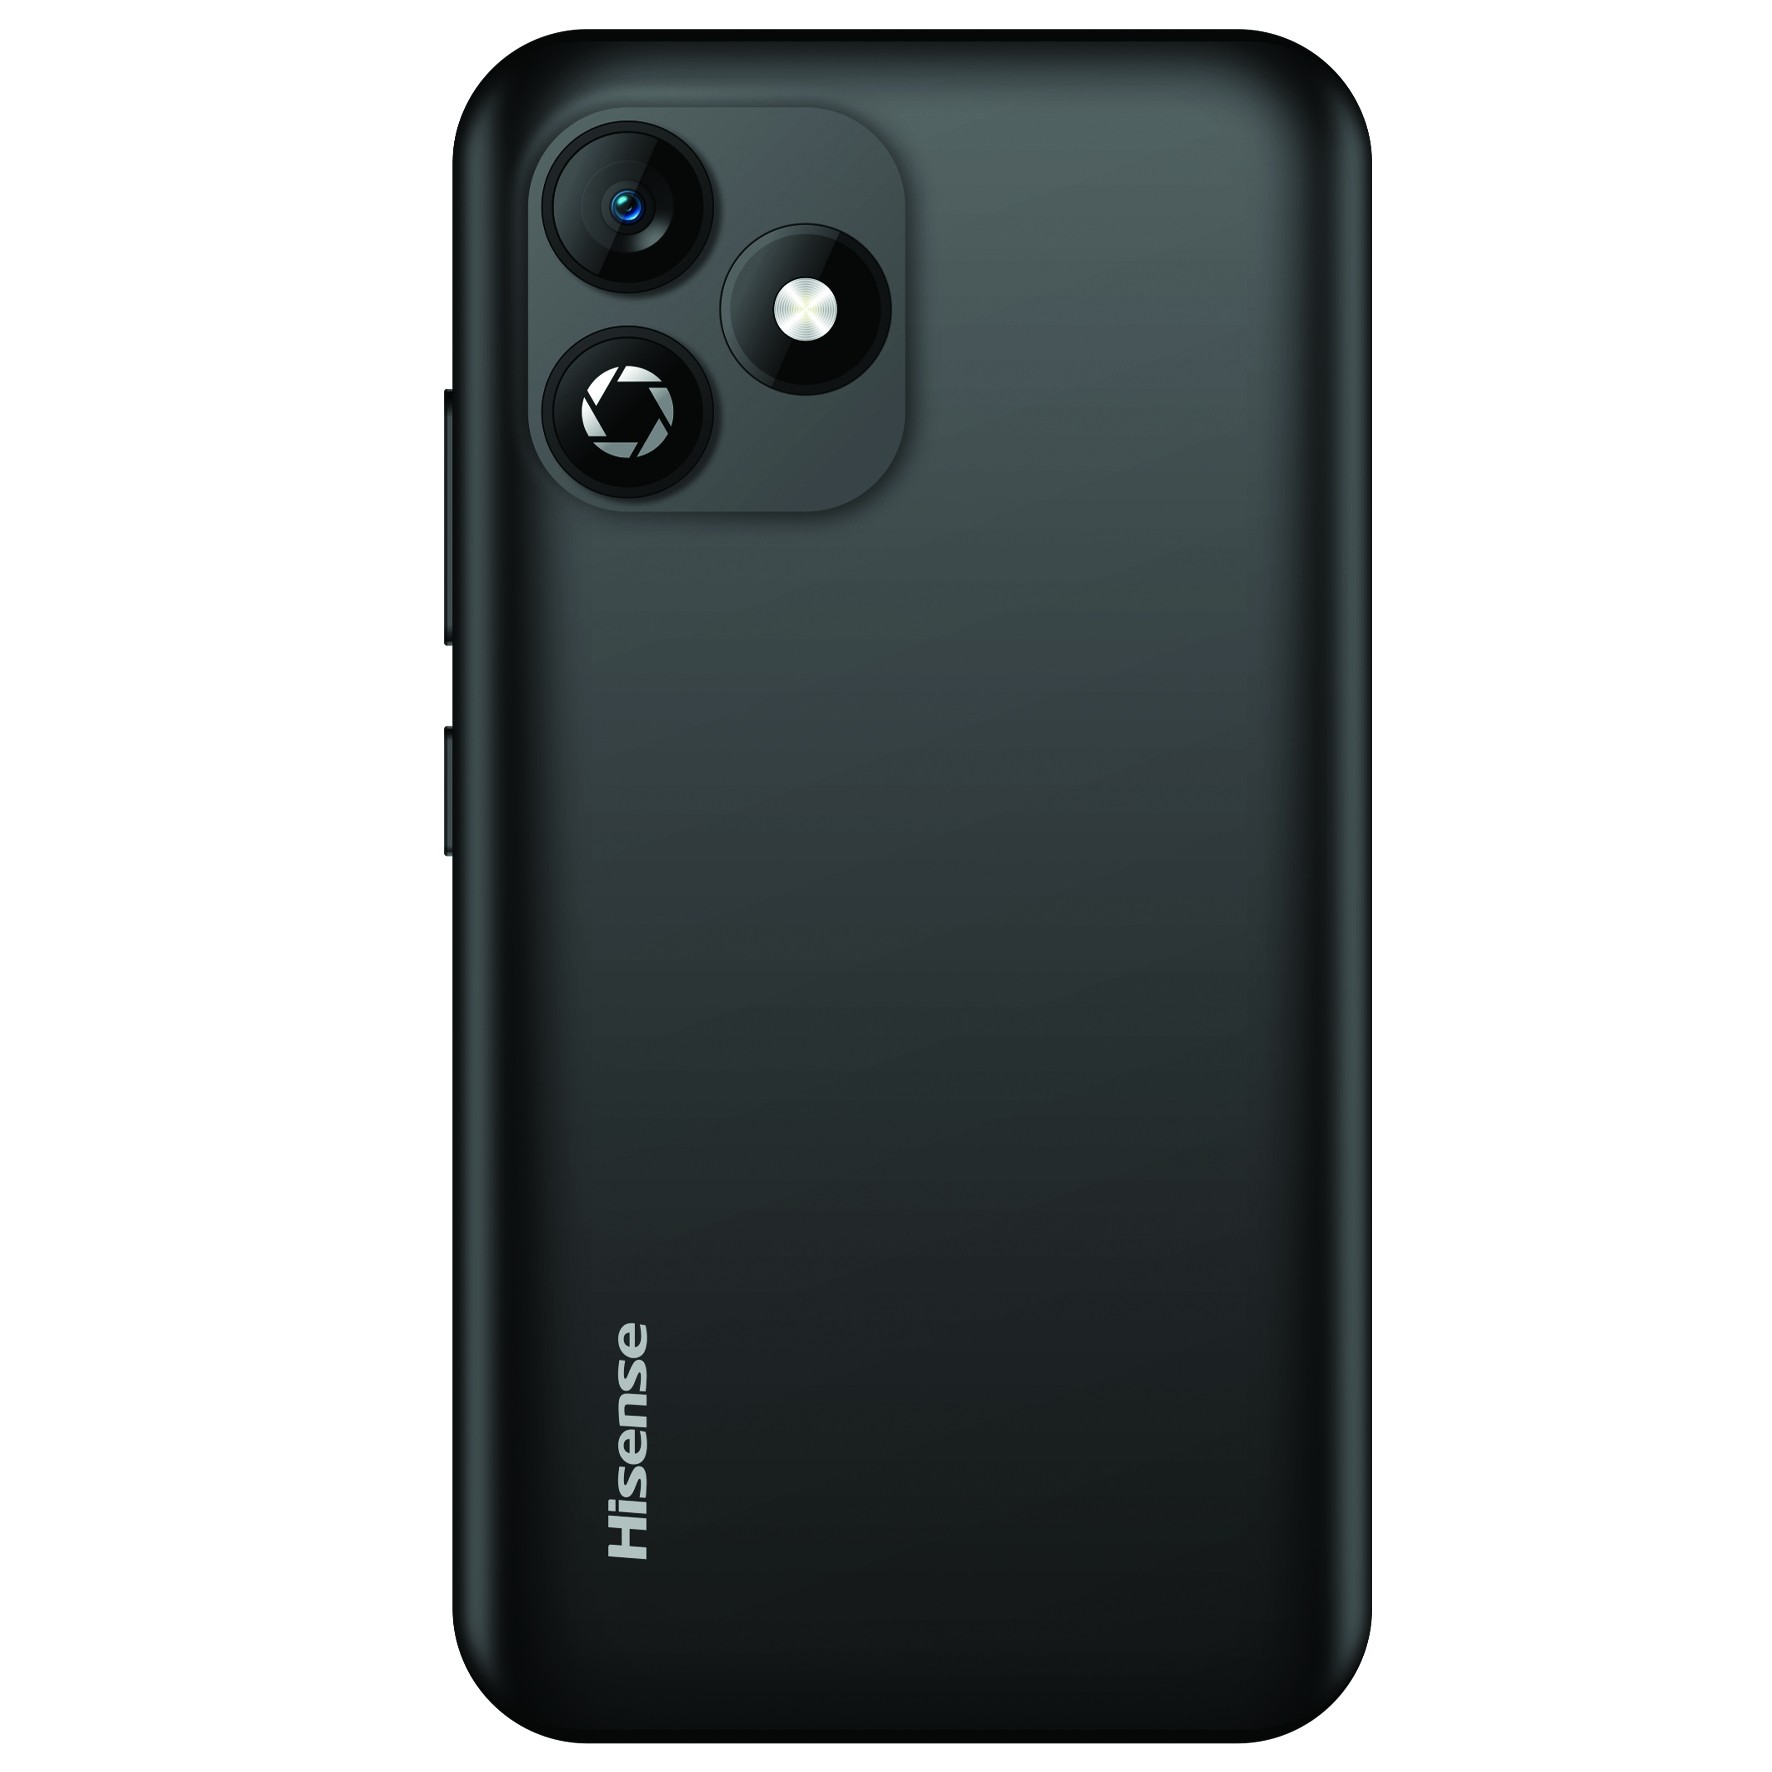 Hisense U607 (Vodacom) 